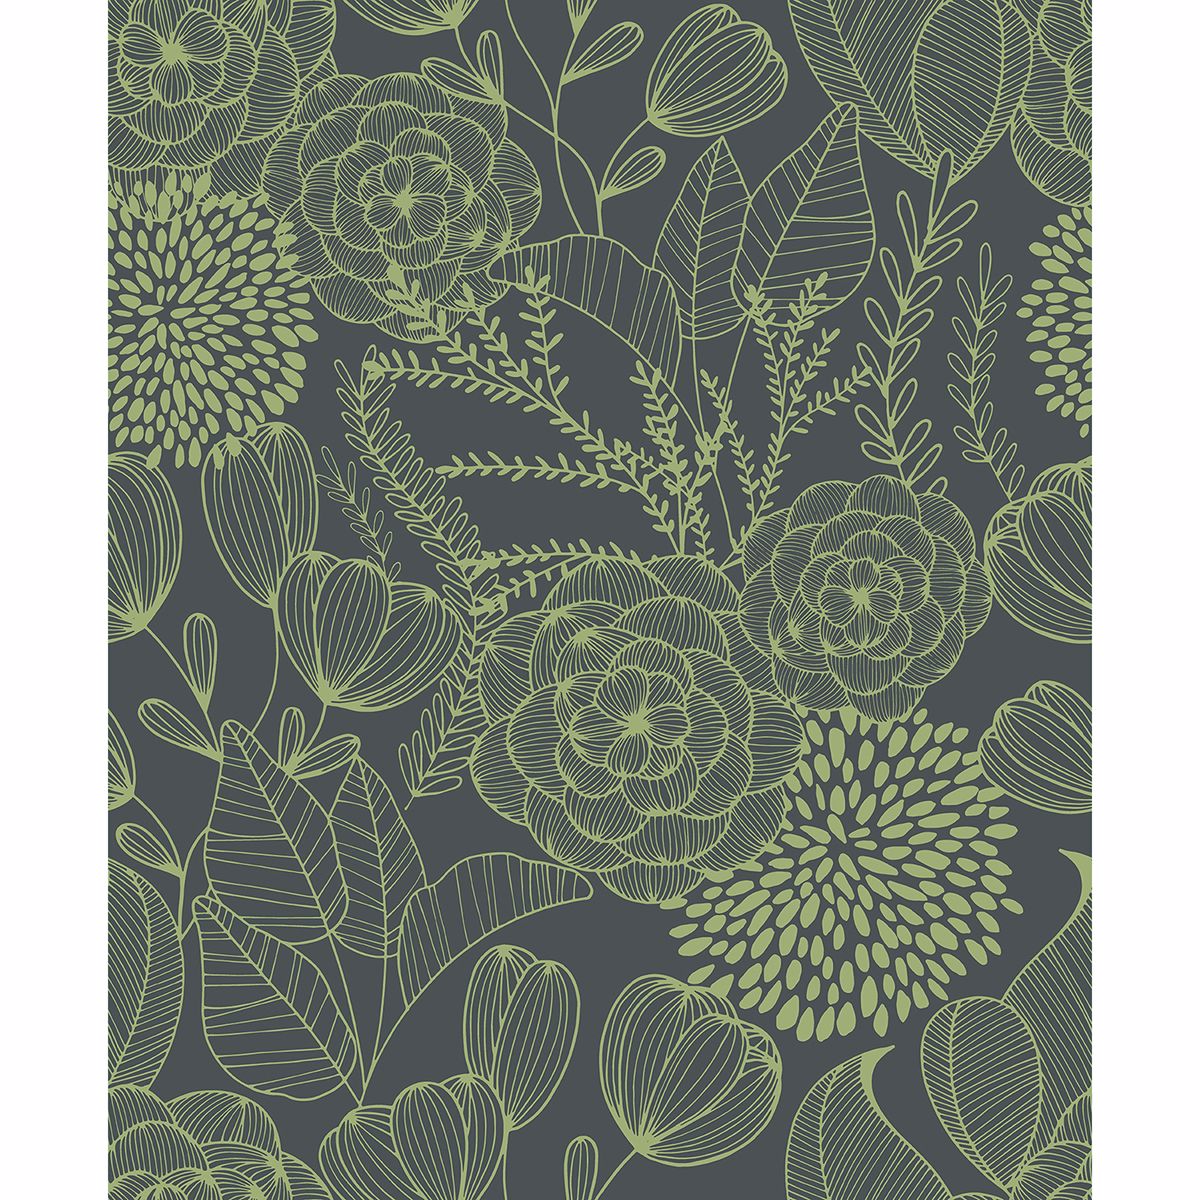 2903-25855 - Alannah Green Botanical Wallpaper - by A-Street Prints